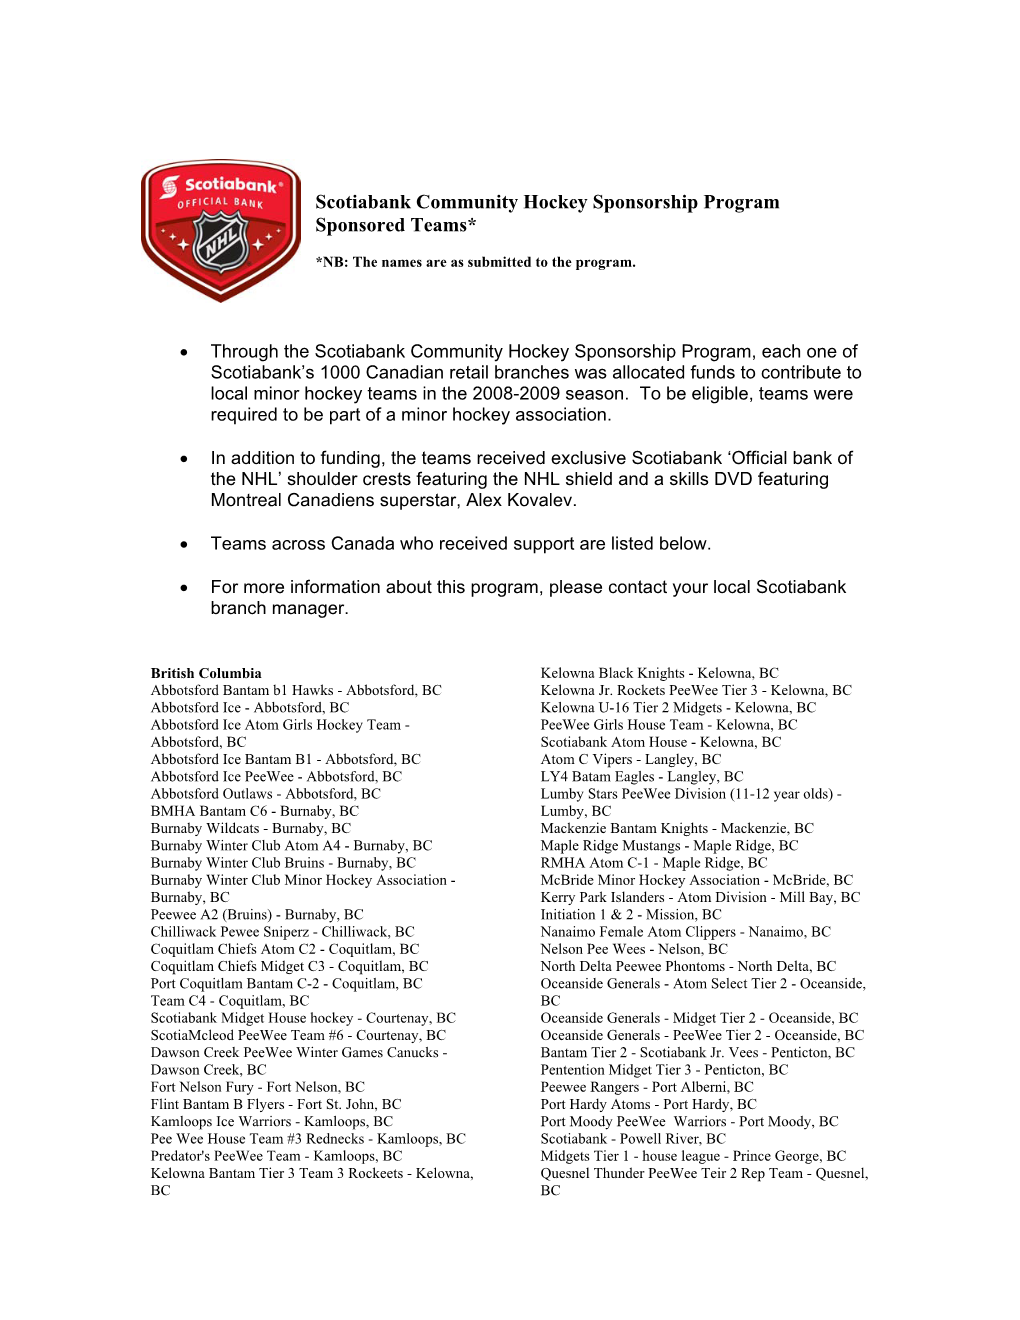 Scotiabank Community Hockey Sponsorship Program Sponsored Teams*